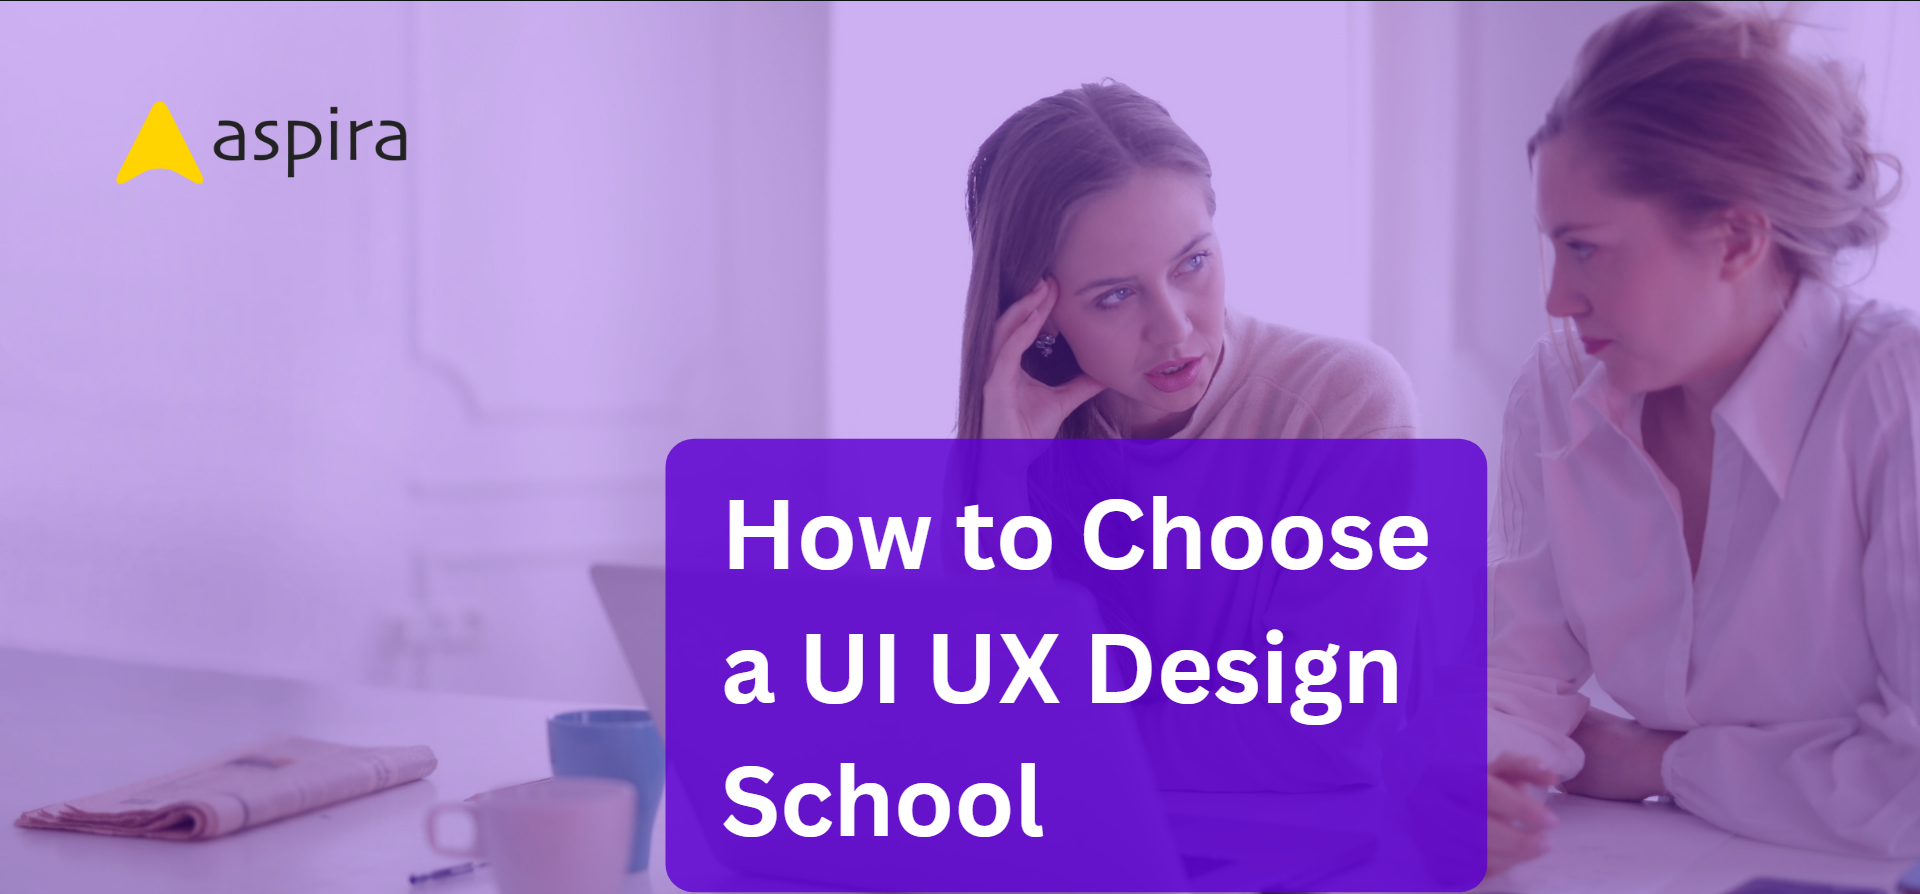 How to Choose a UI UX Design School